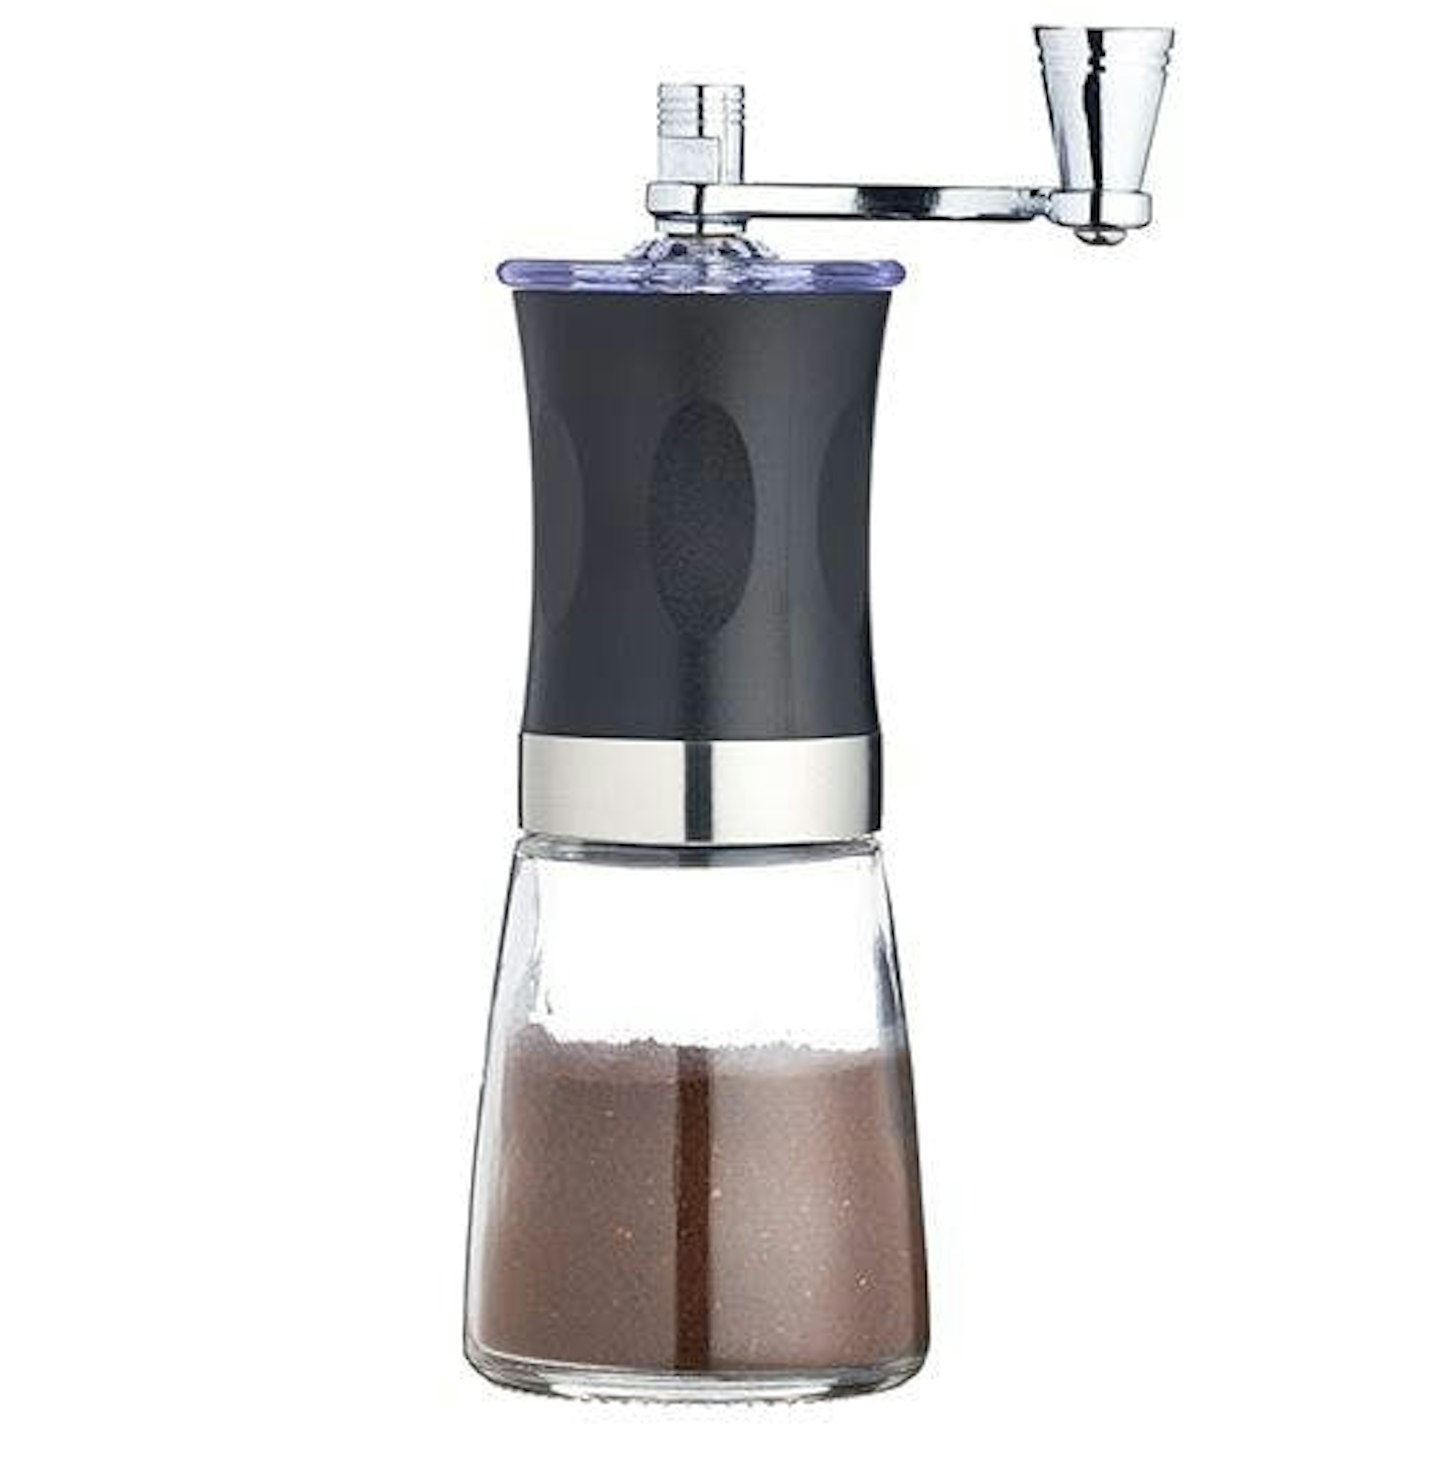 Best coffee grinders: LE'XPRESS KCLXGRIND3 Hand Coffee Grinder